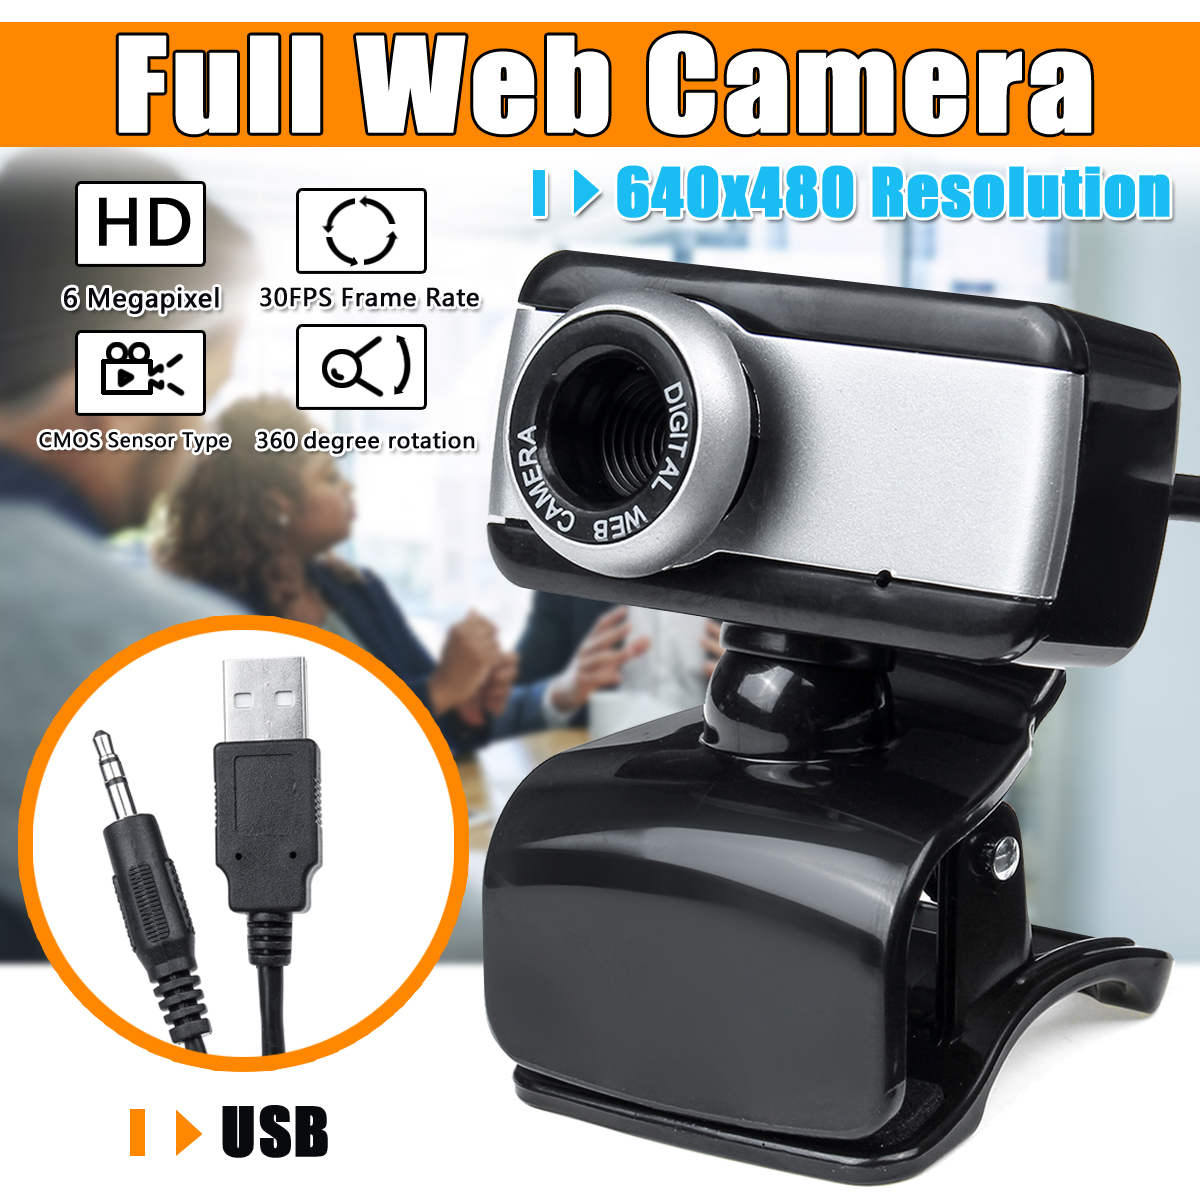 HD-USB-Desktop-Computer-Laptop-Digital-Full-Web-Camera-Webcam-Cam-W-Microphone-1679724-1